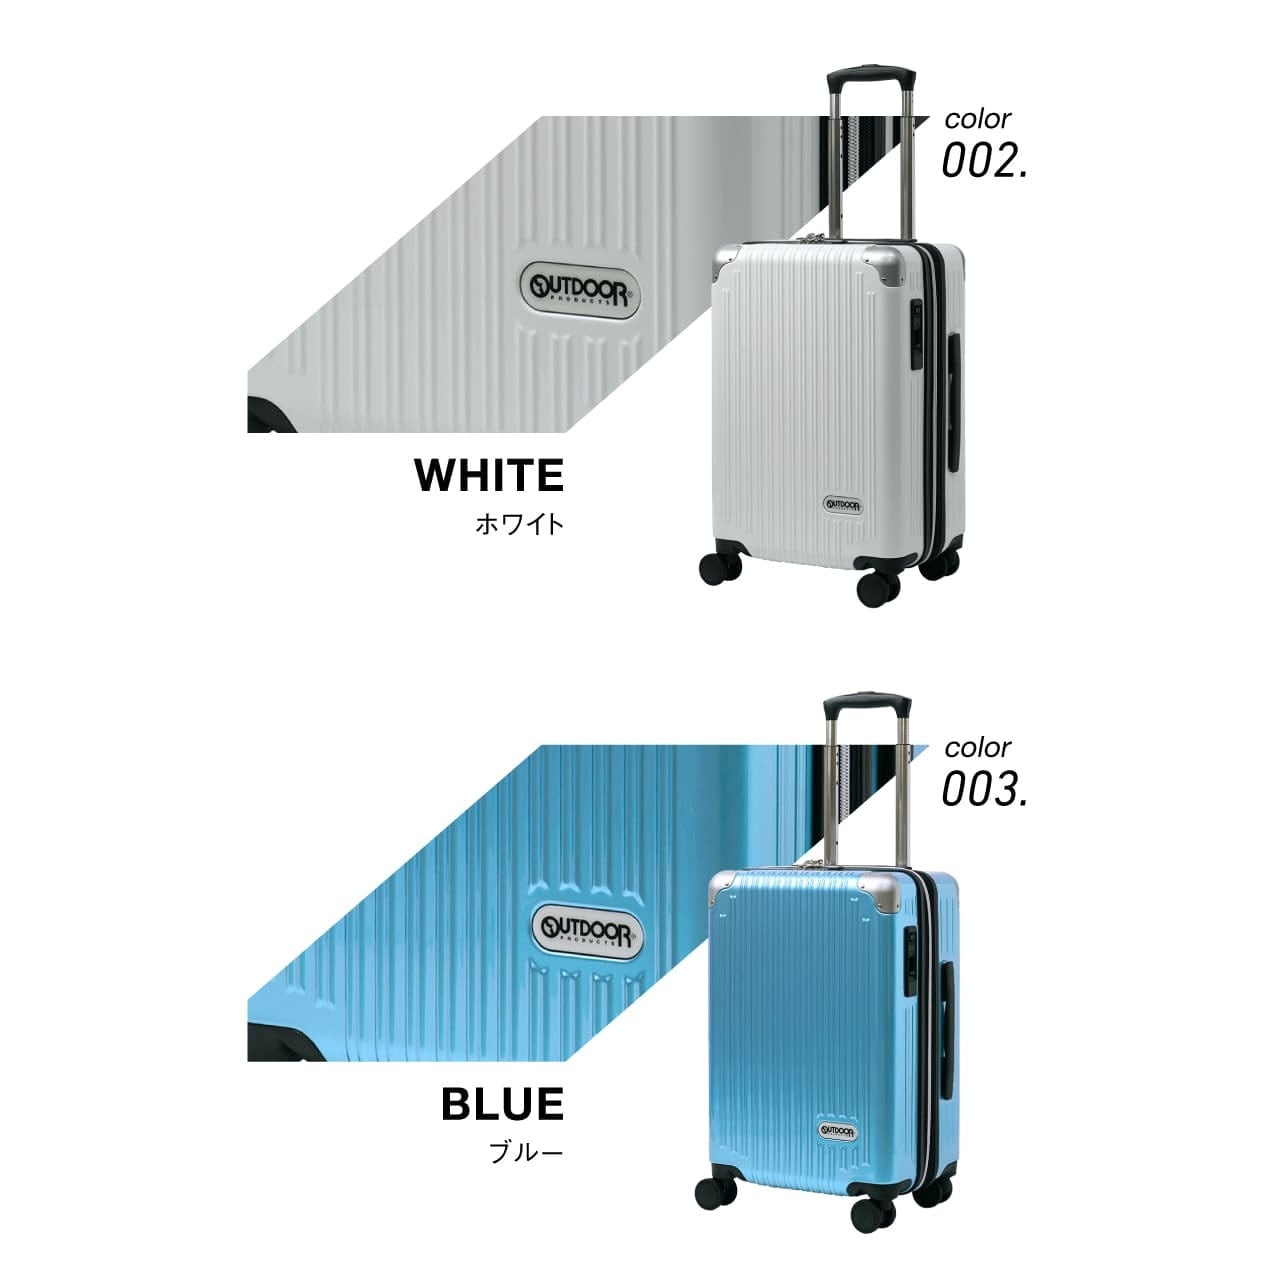 OUTDOOR PRODUTS スーツケース ストッパー付き 機内持ち込み 拡張機能